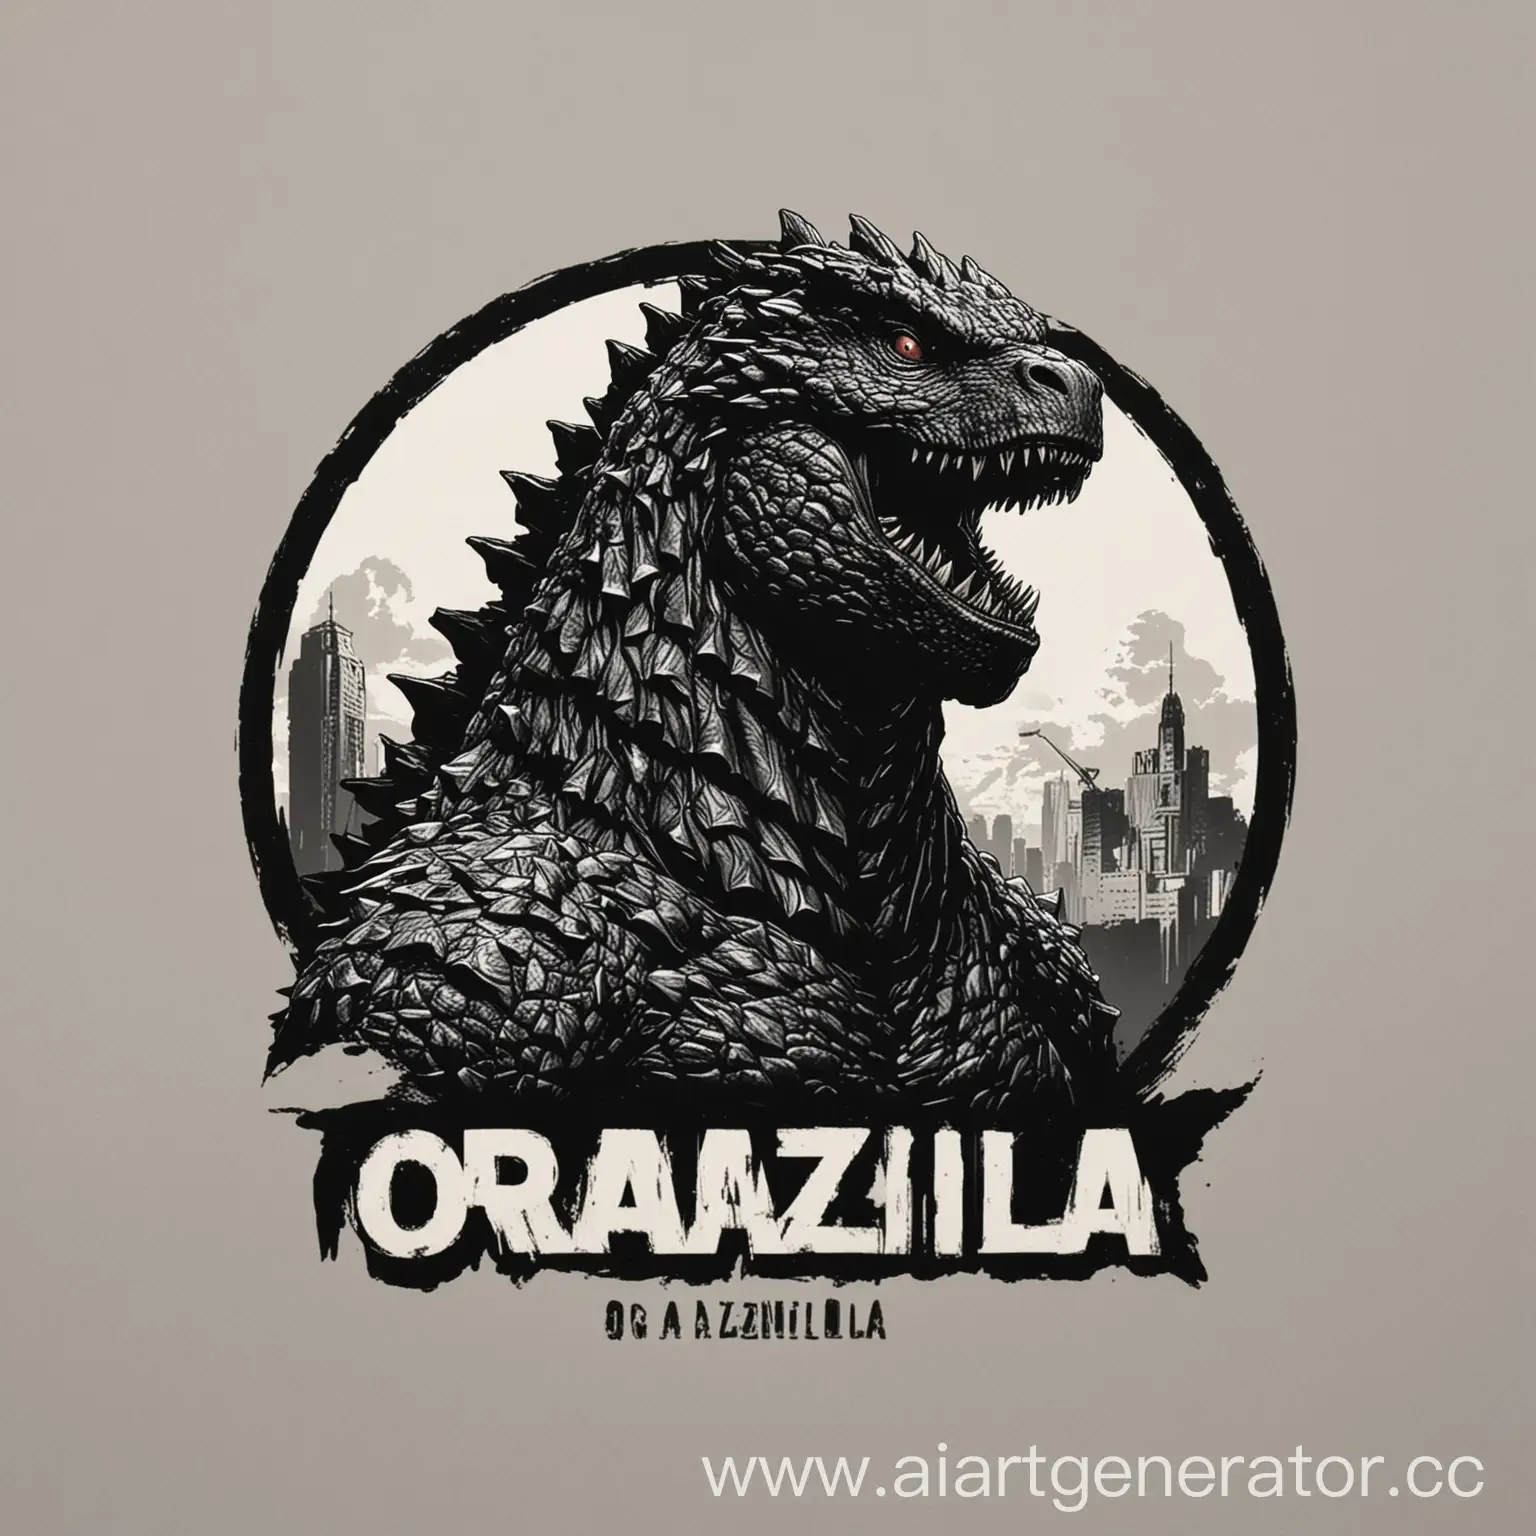 Organizilla-Logo-Godzilla-Form-with-Company-Name-on-White-Background